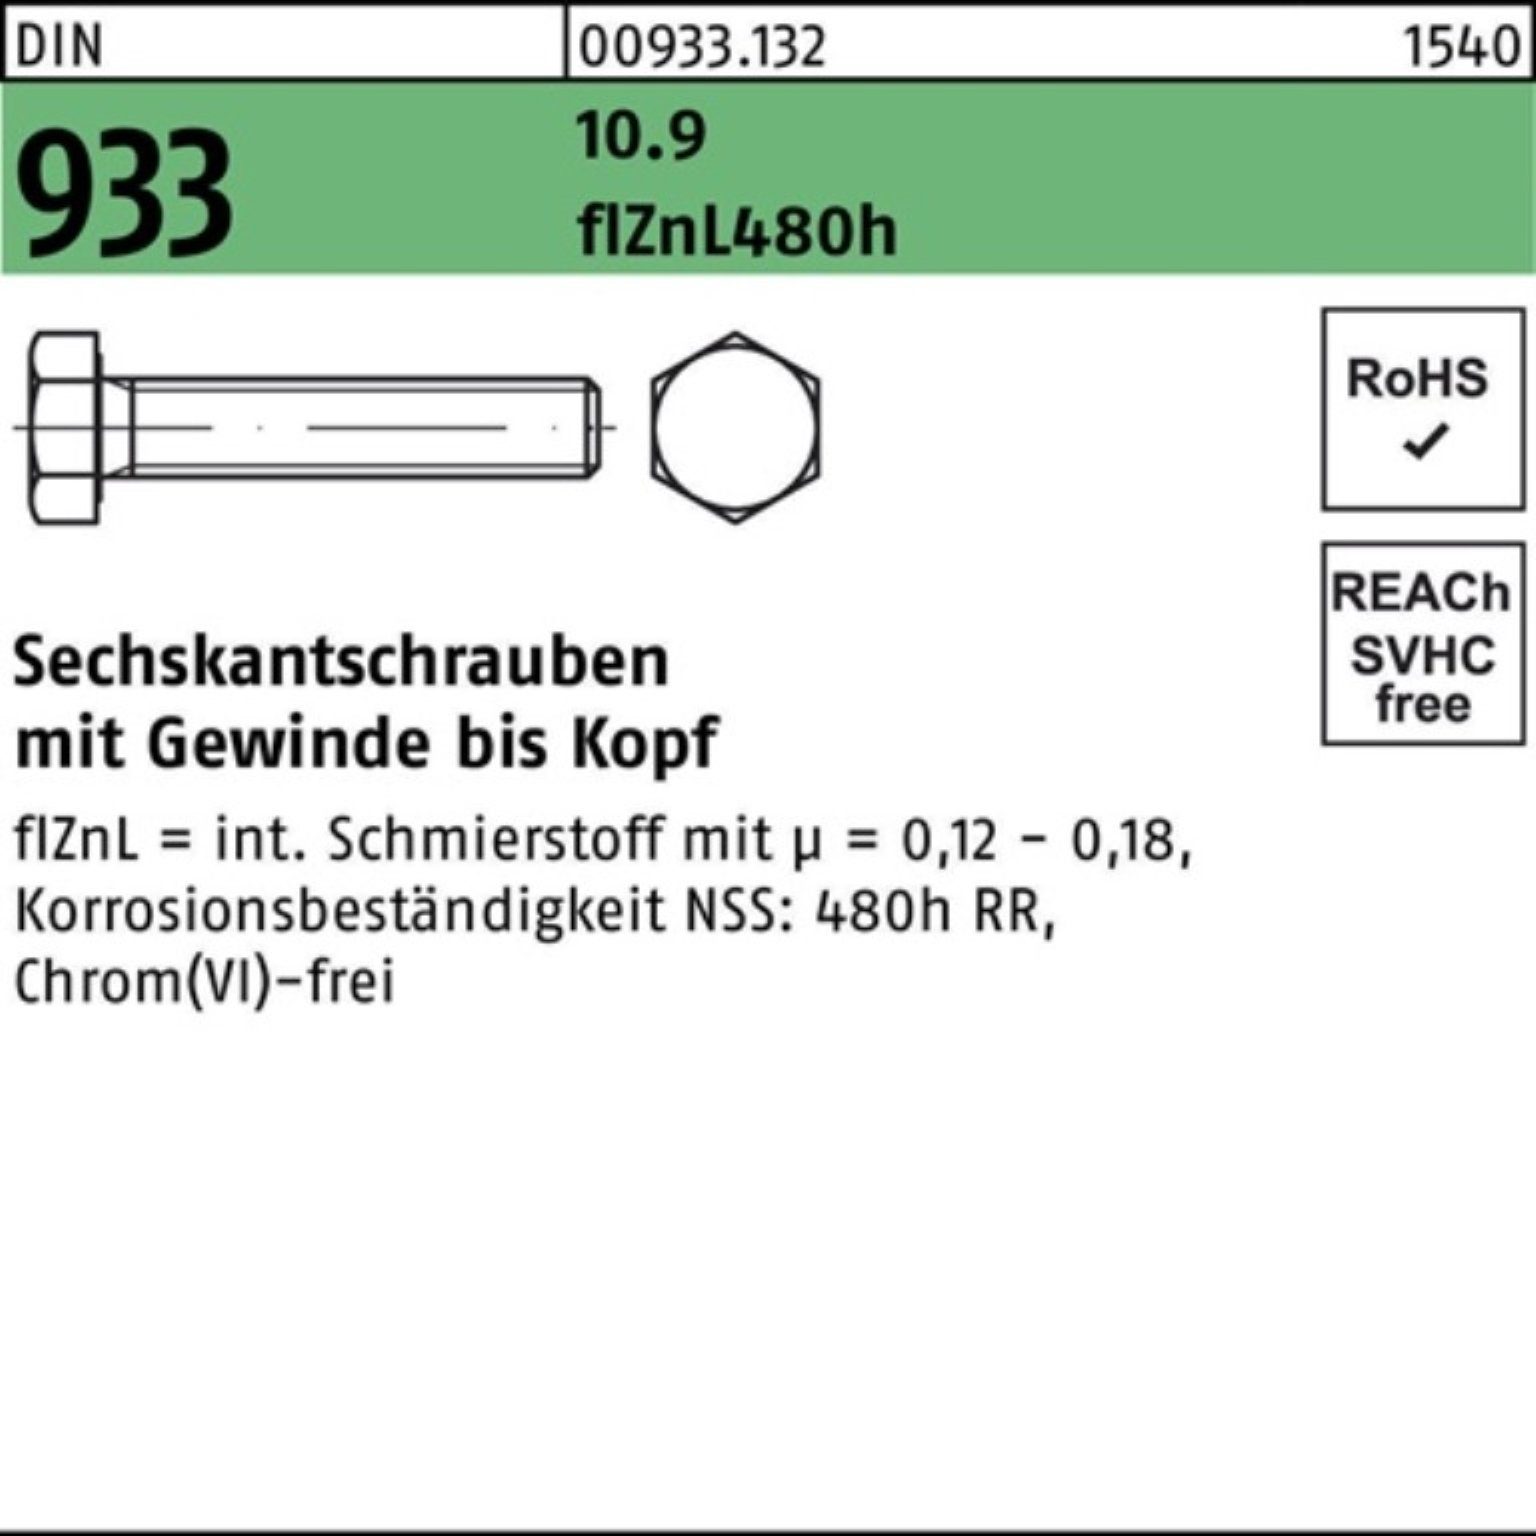 Reyher Sechskantschraube 100er Pack Sechskantschraube DIN 933 VG M16x 55 10.9 flZnL/nc/x/x/480h